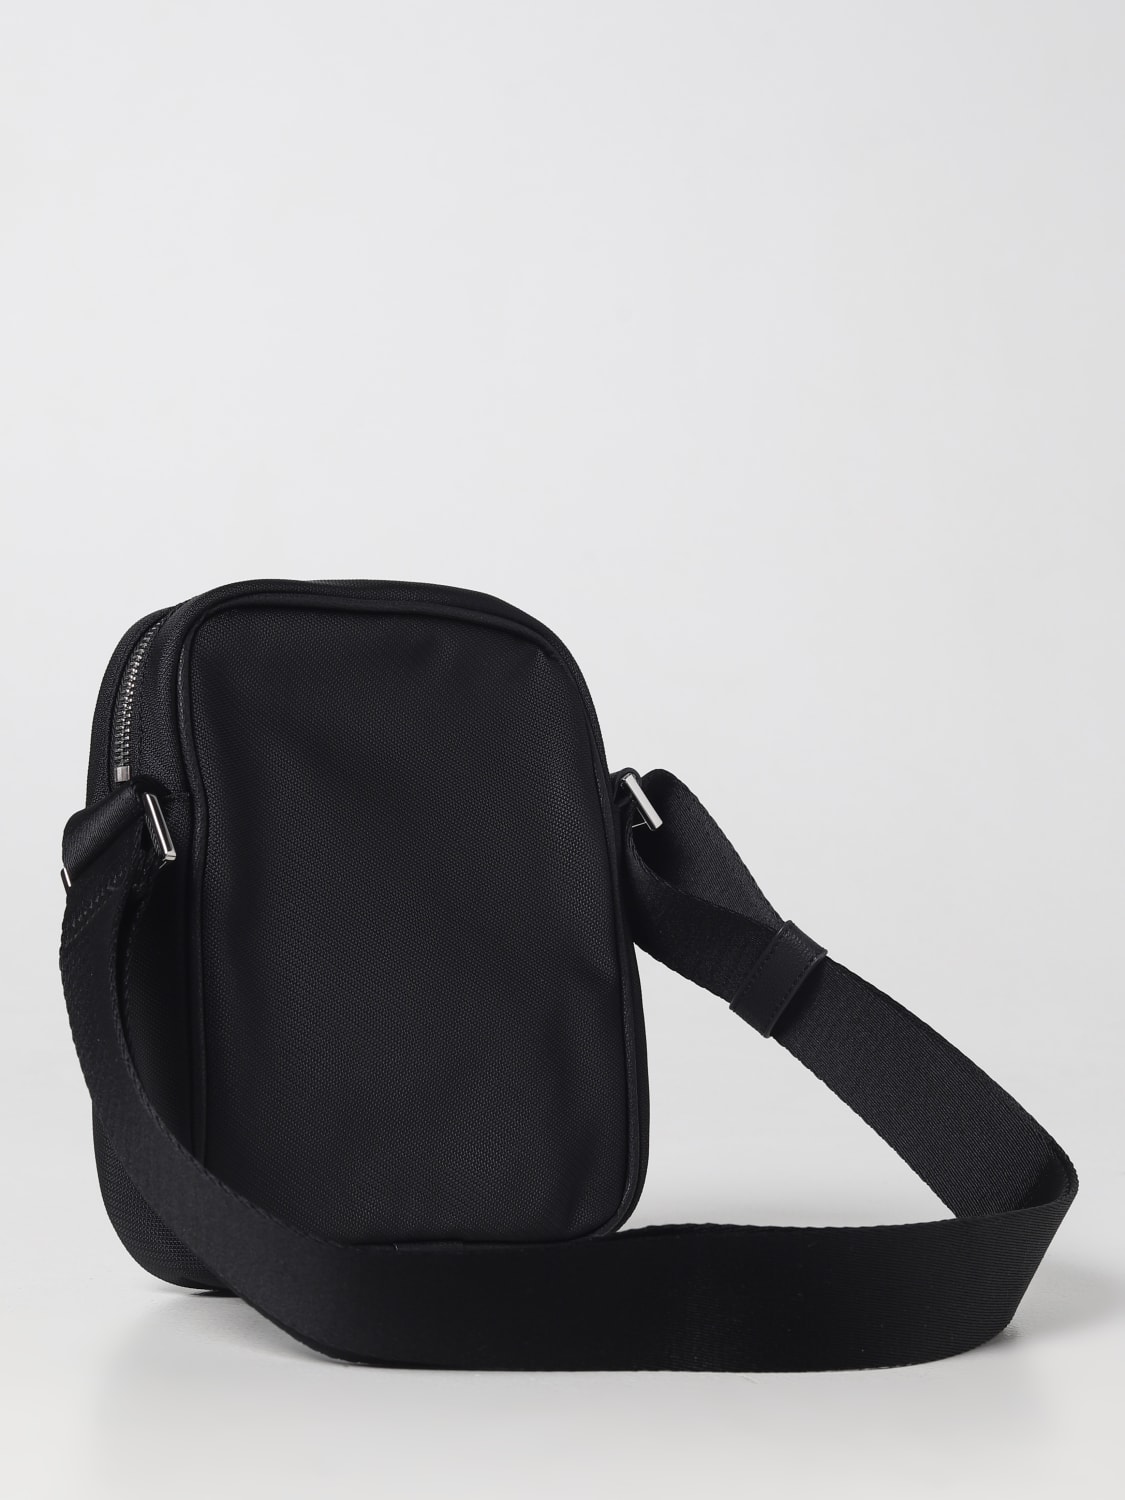 Calvin Klein Crossbody Bag in Black for Men